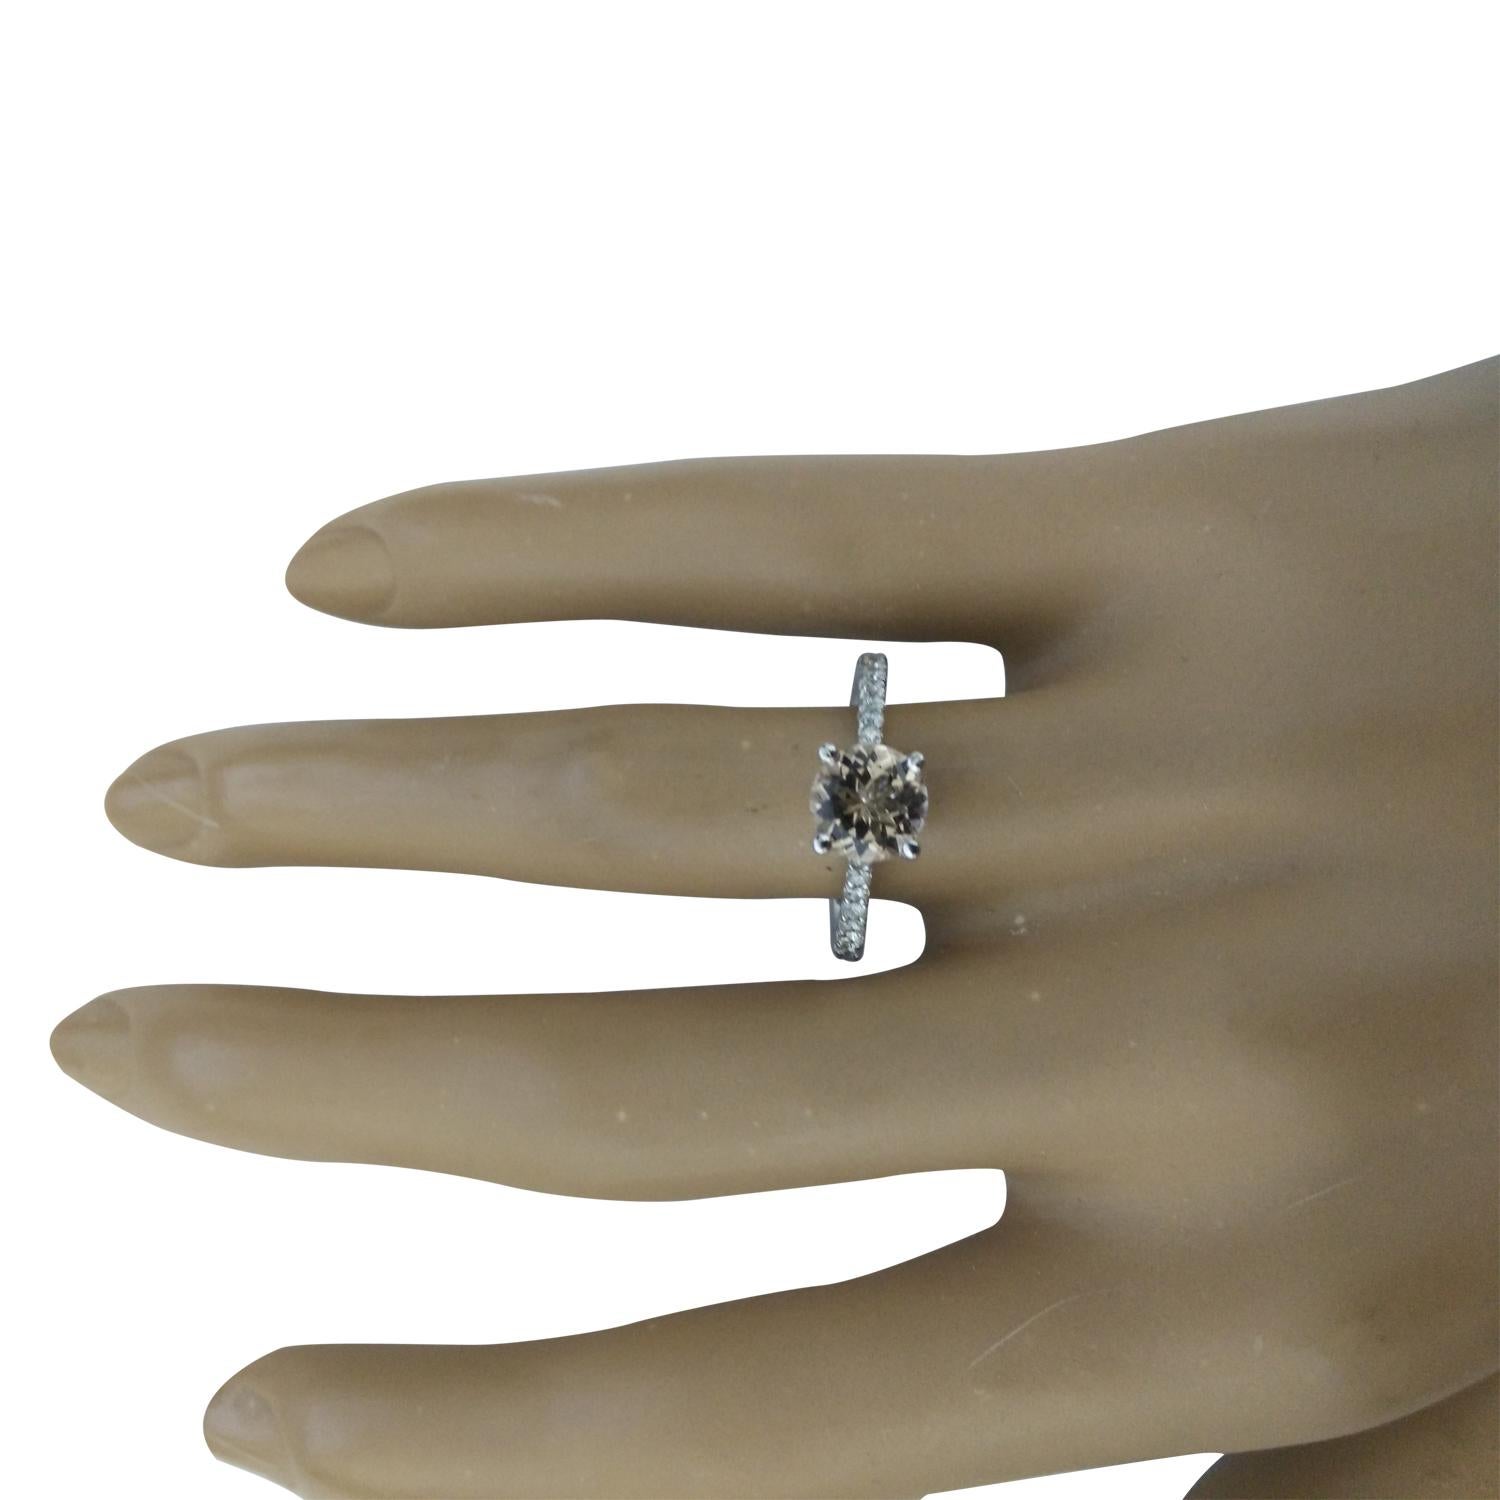 1.30 Carat Natural Morganite 14 Karat Solid White Gold Diamond Ring
Stamped: 14K 
Ring Size: 7 
Total Ring Weight: 2.9 Grams 
Morganite  Weight: 1.01 Carat (7.00x7.00 Millimeter) 
Diamond Weight: 0.29 Carat (F-G Color, VS2-SI1 Clarity) 
Quantity: